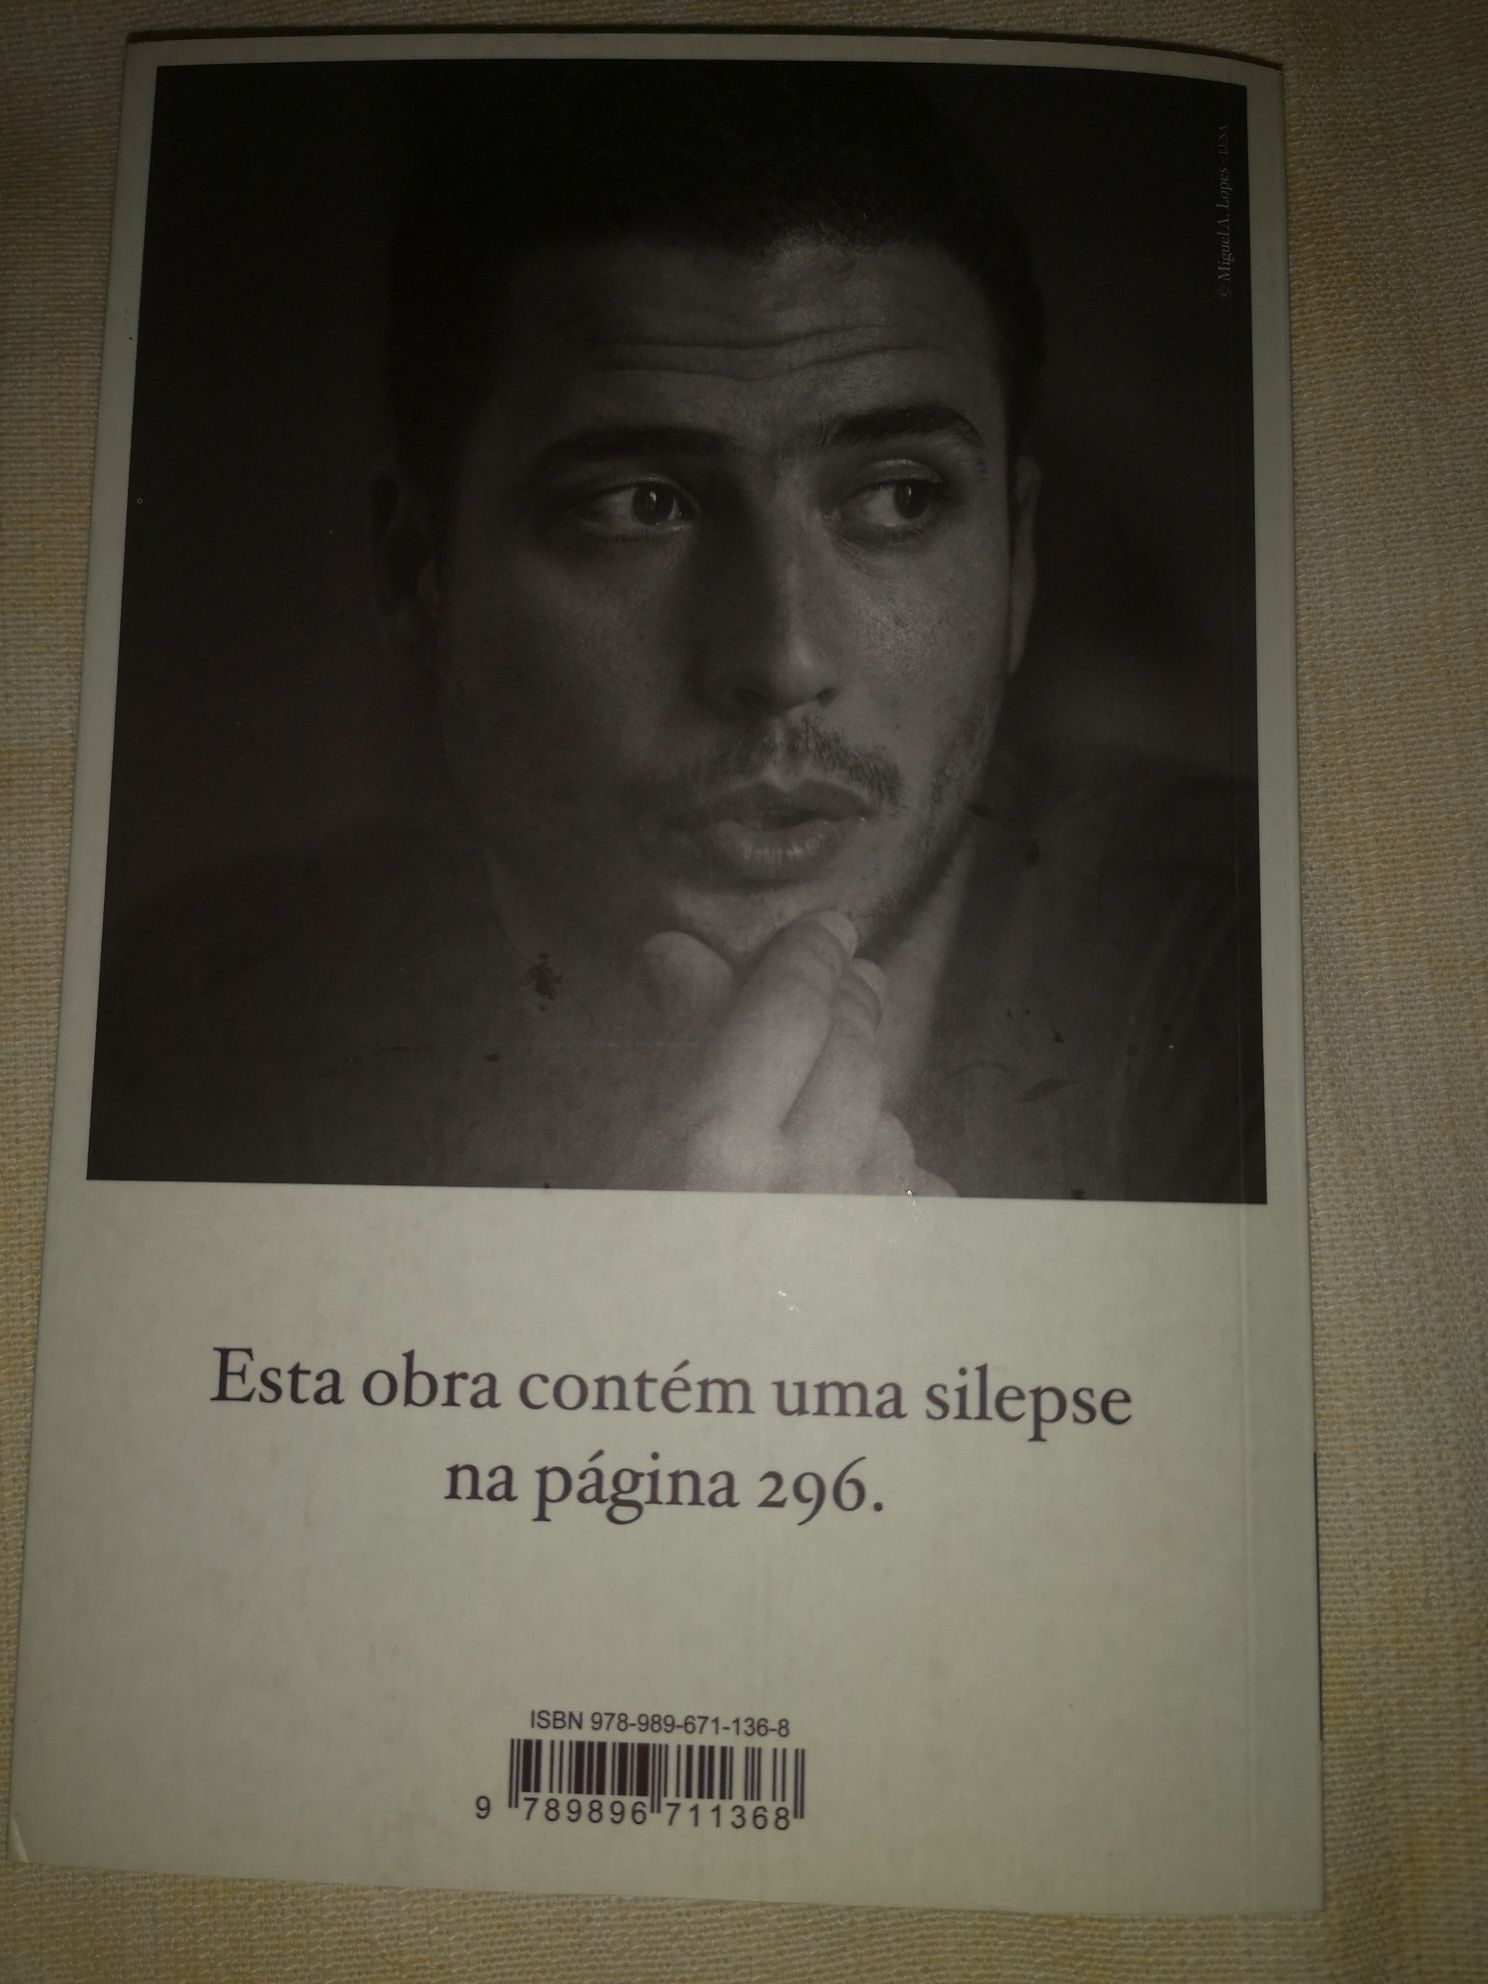 Livro Ricardo Araújo Pereira